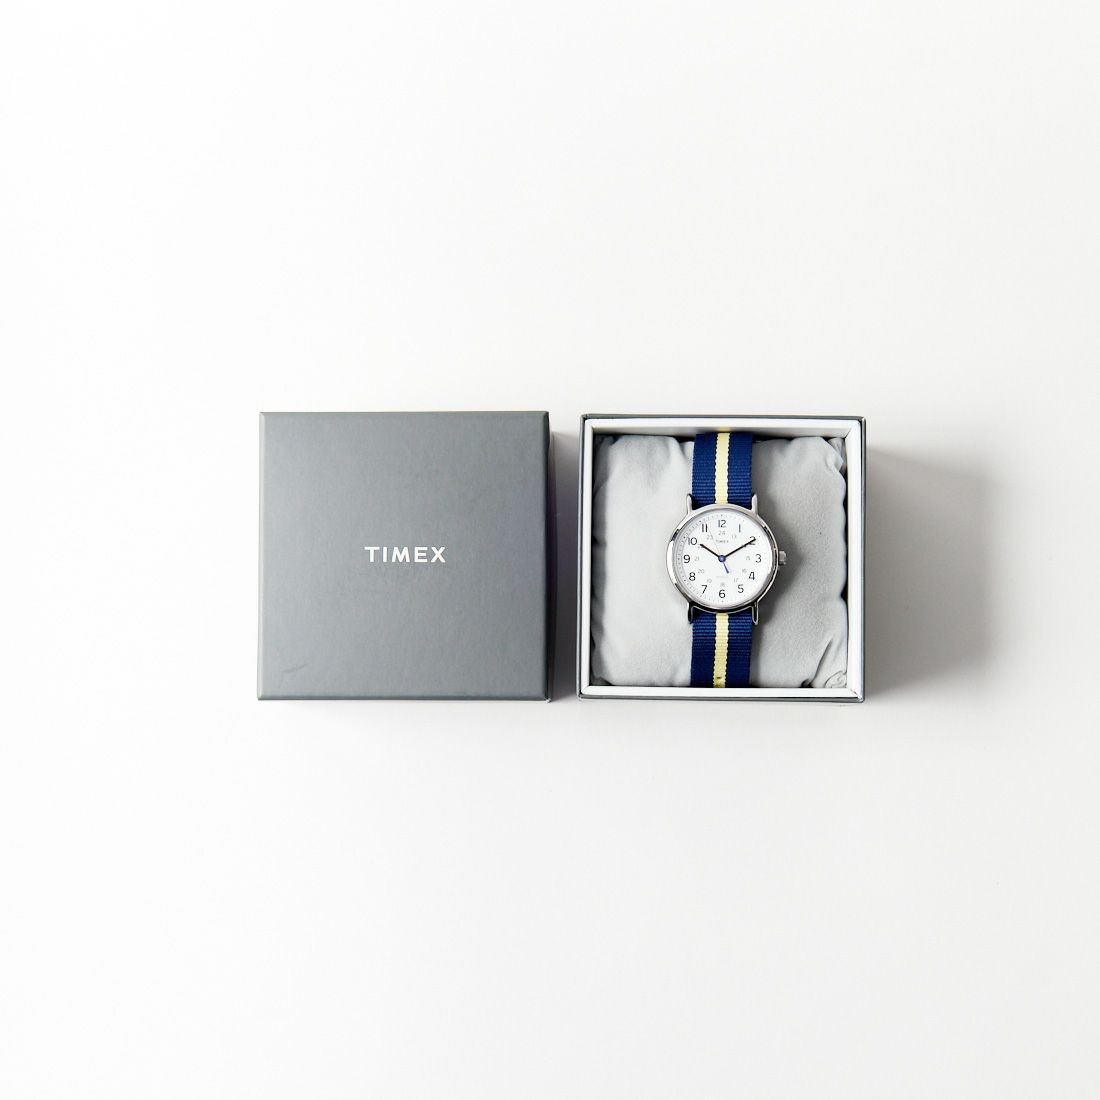 TIMEX [タイメックス] ウィークエンダー セントラルパーク [TW2U84500] WHITE